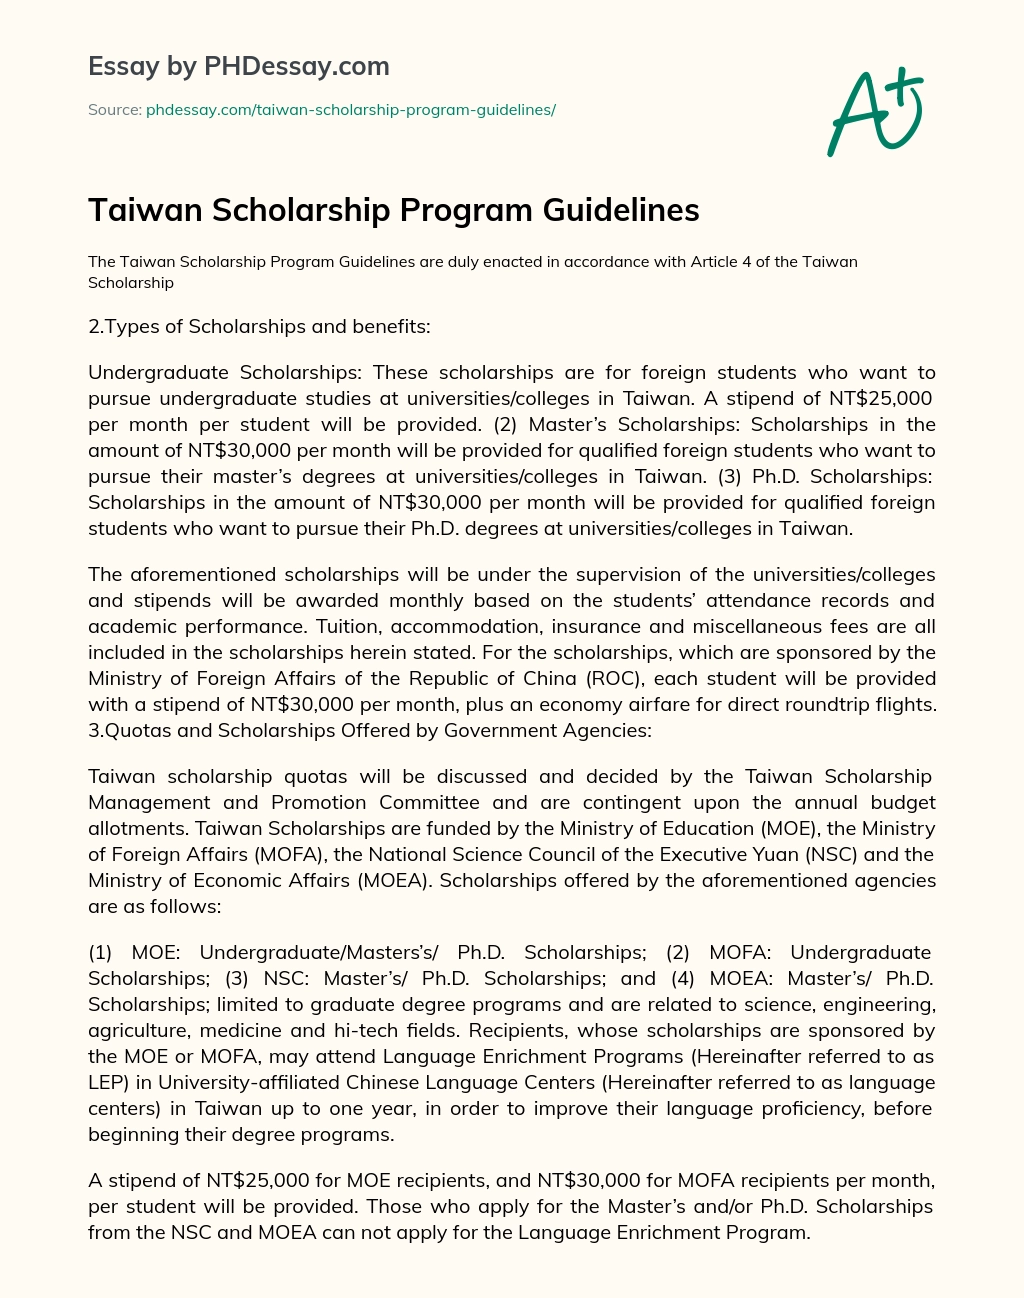 Taiwan Scholarship Program Guidelines essay